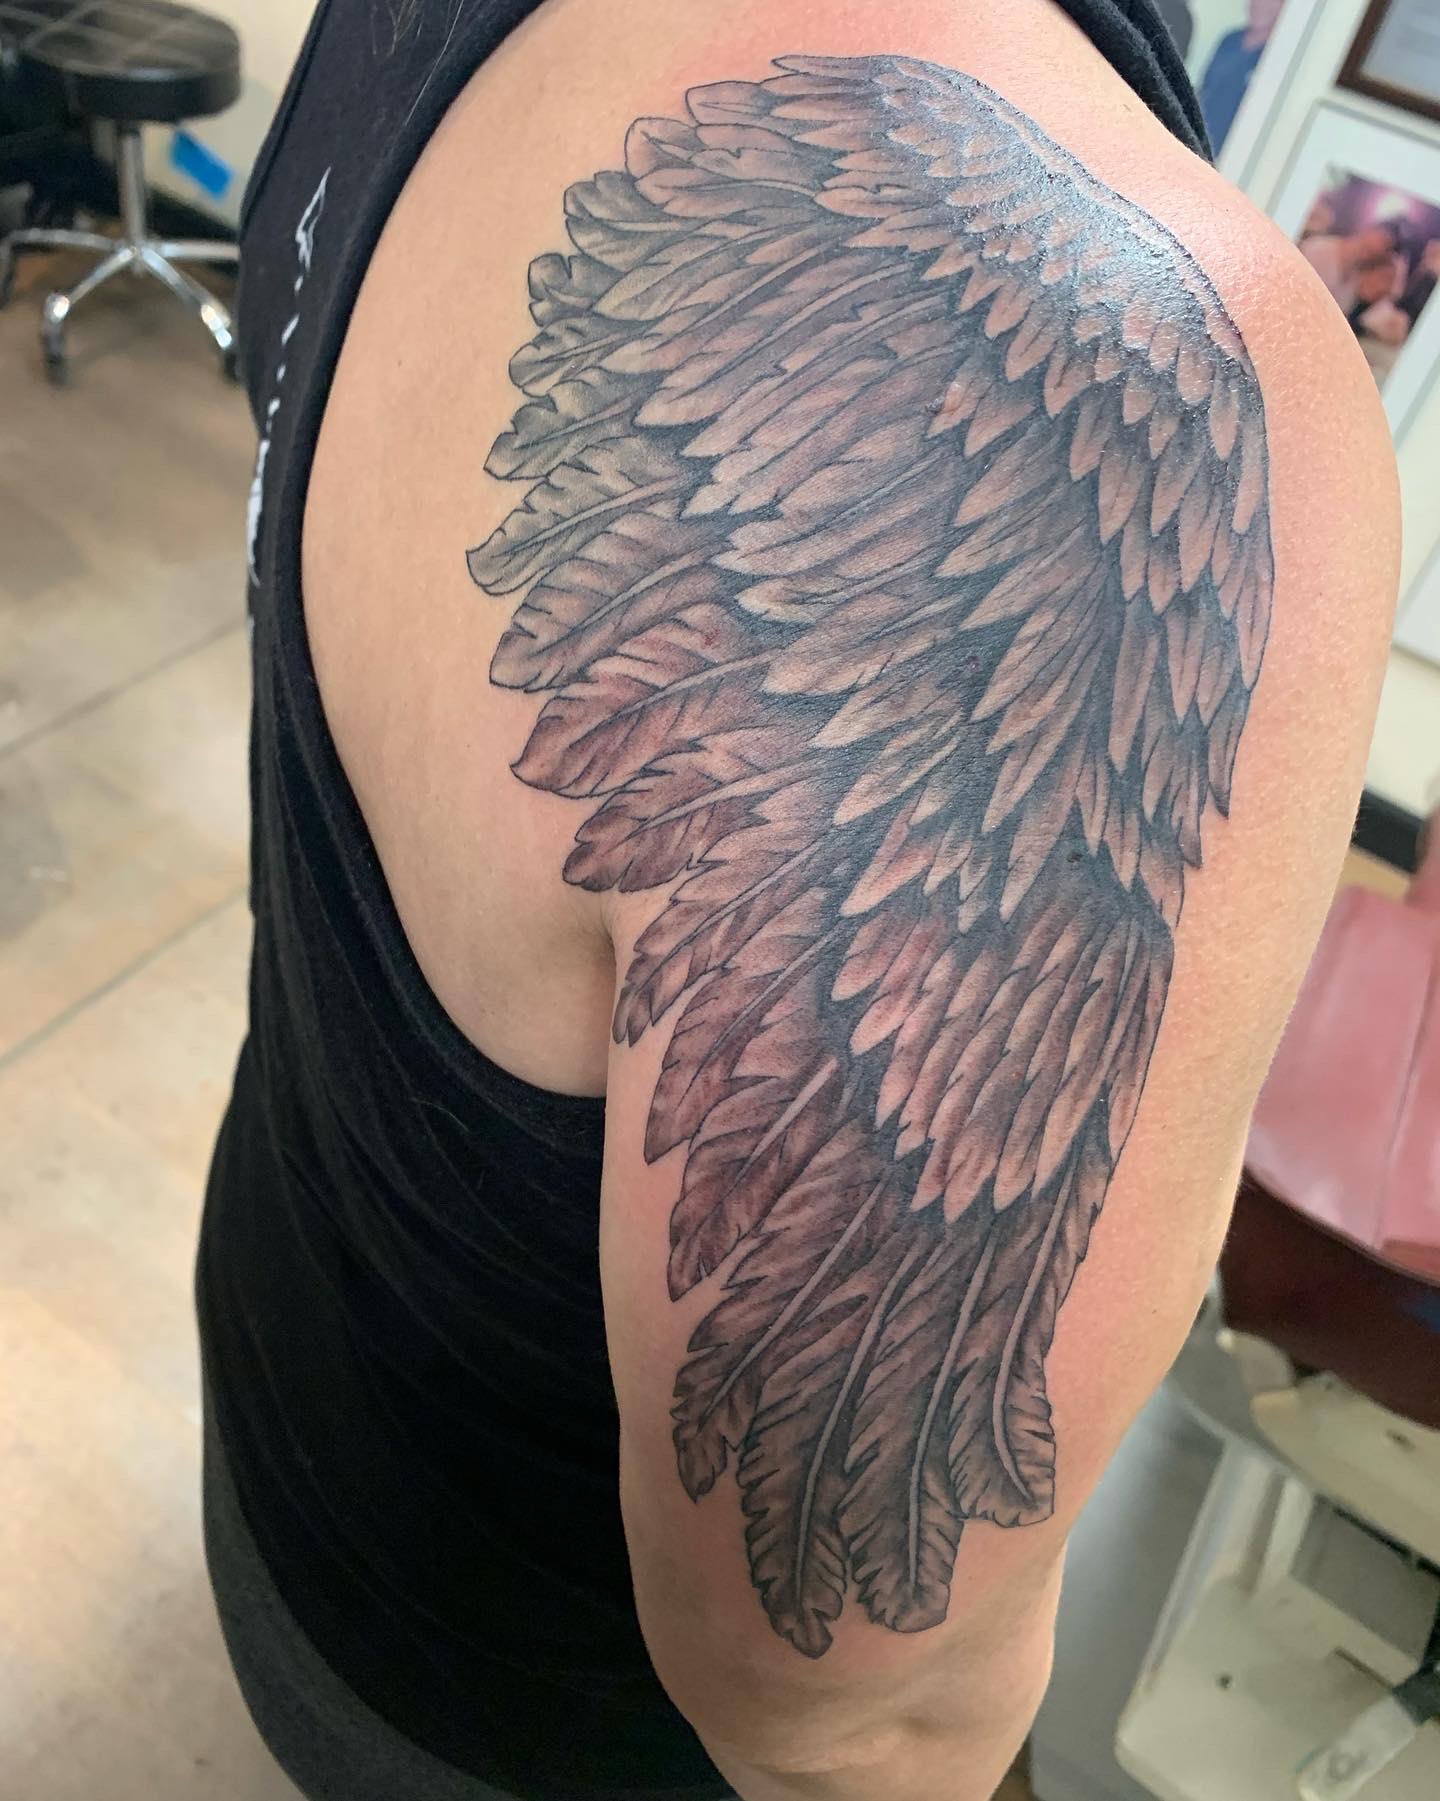 Large Angel Wings Cross Temporary Tattoo Sticker Waterproof Full Back Fake  Tattoo For Women And Men From Semenlockring, $6.94 | DHgate.Com